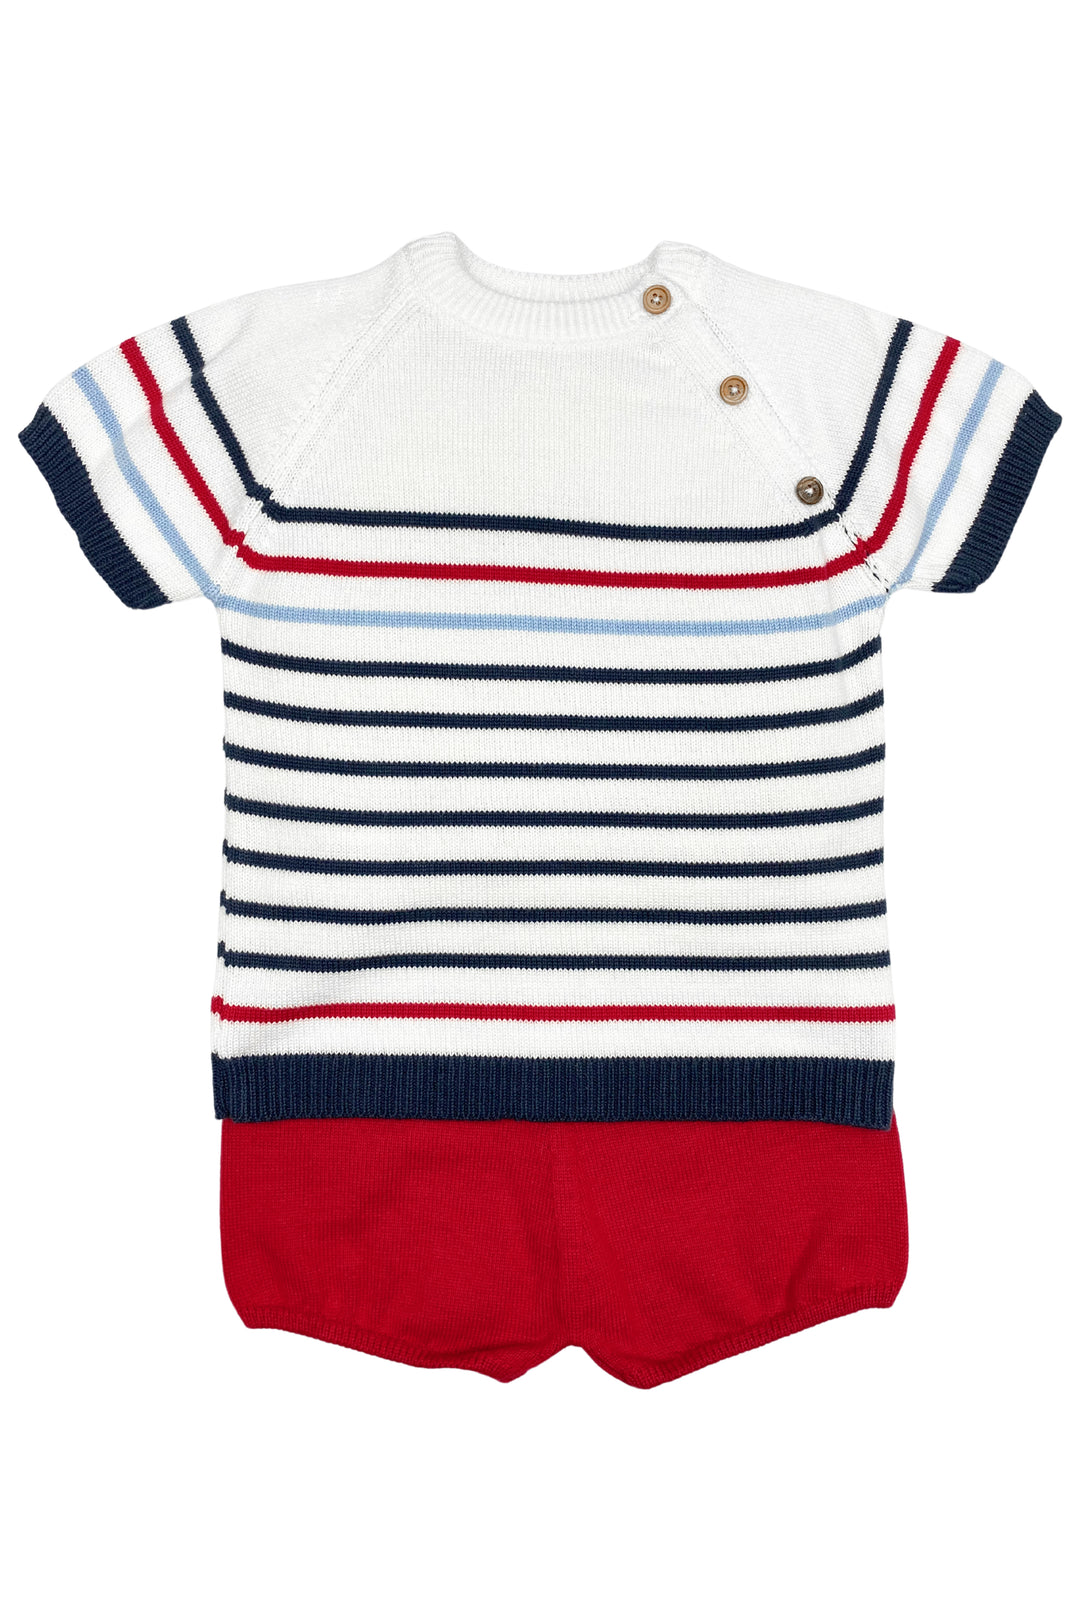 Granlei "Casper" Navy & Red Striped Knit Top & Shorts | Millie and John